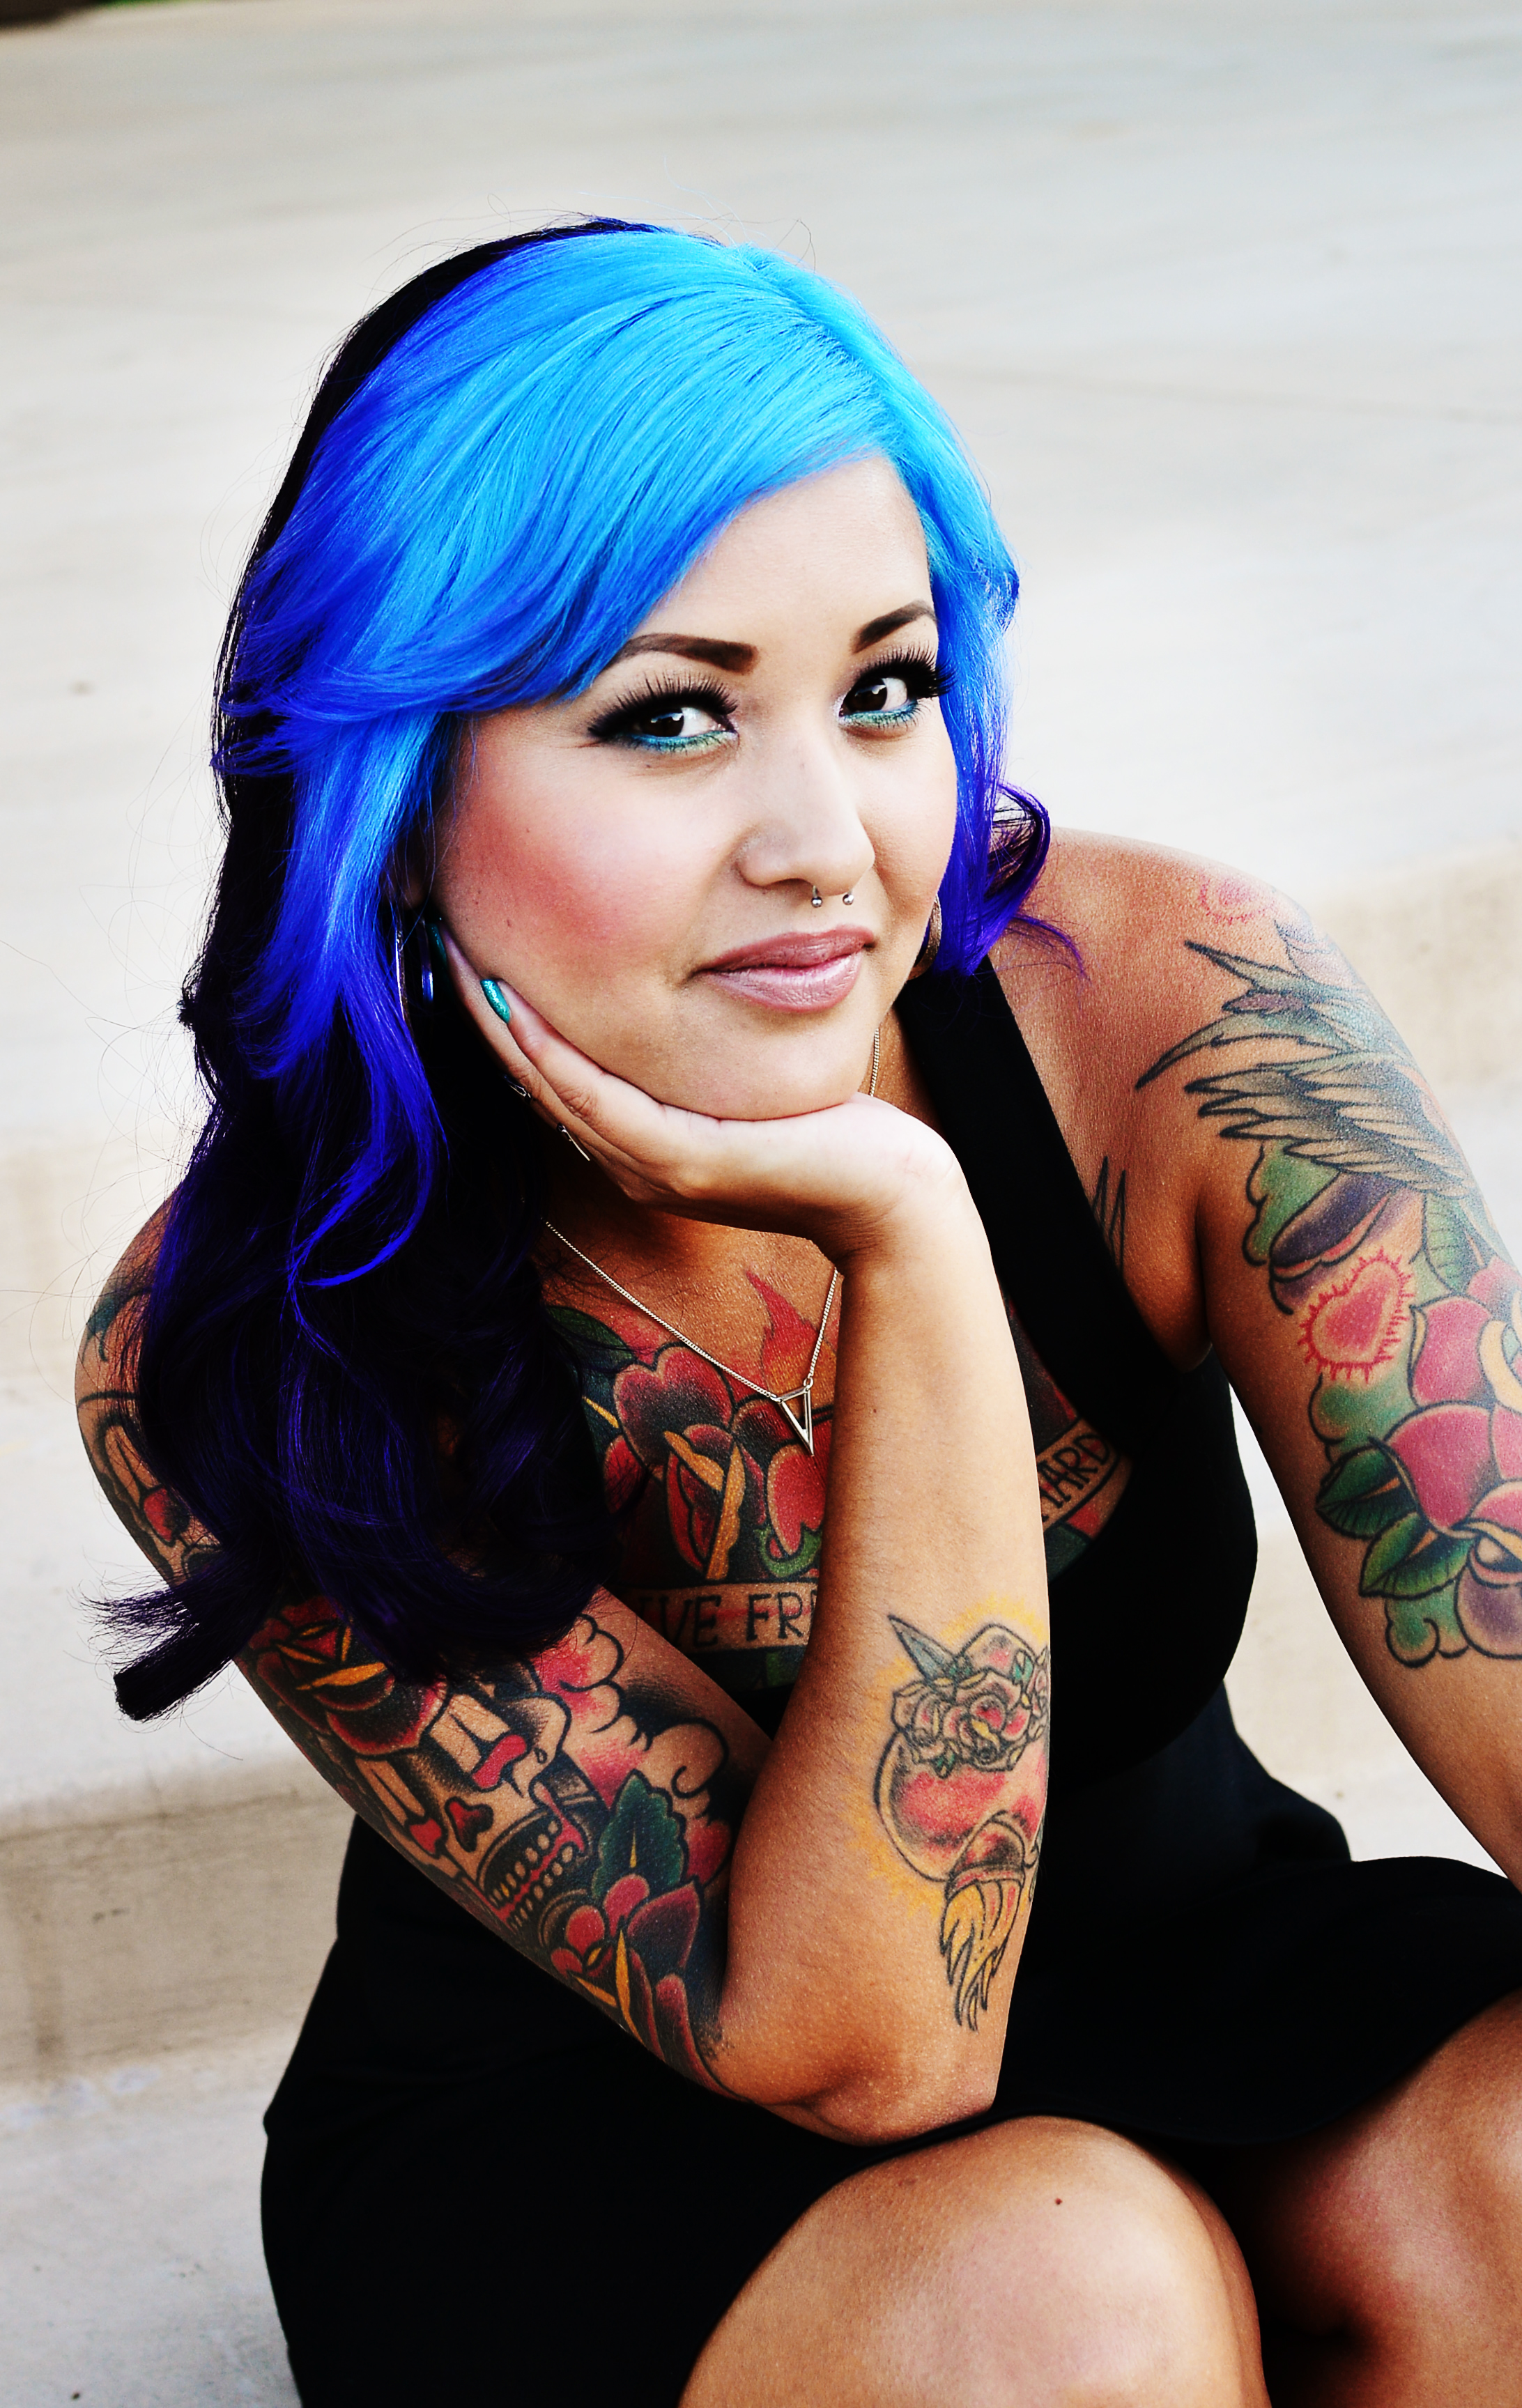 temecula portrait, blue hair, tattoos